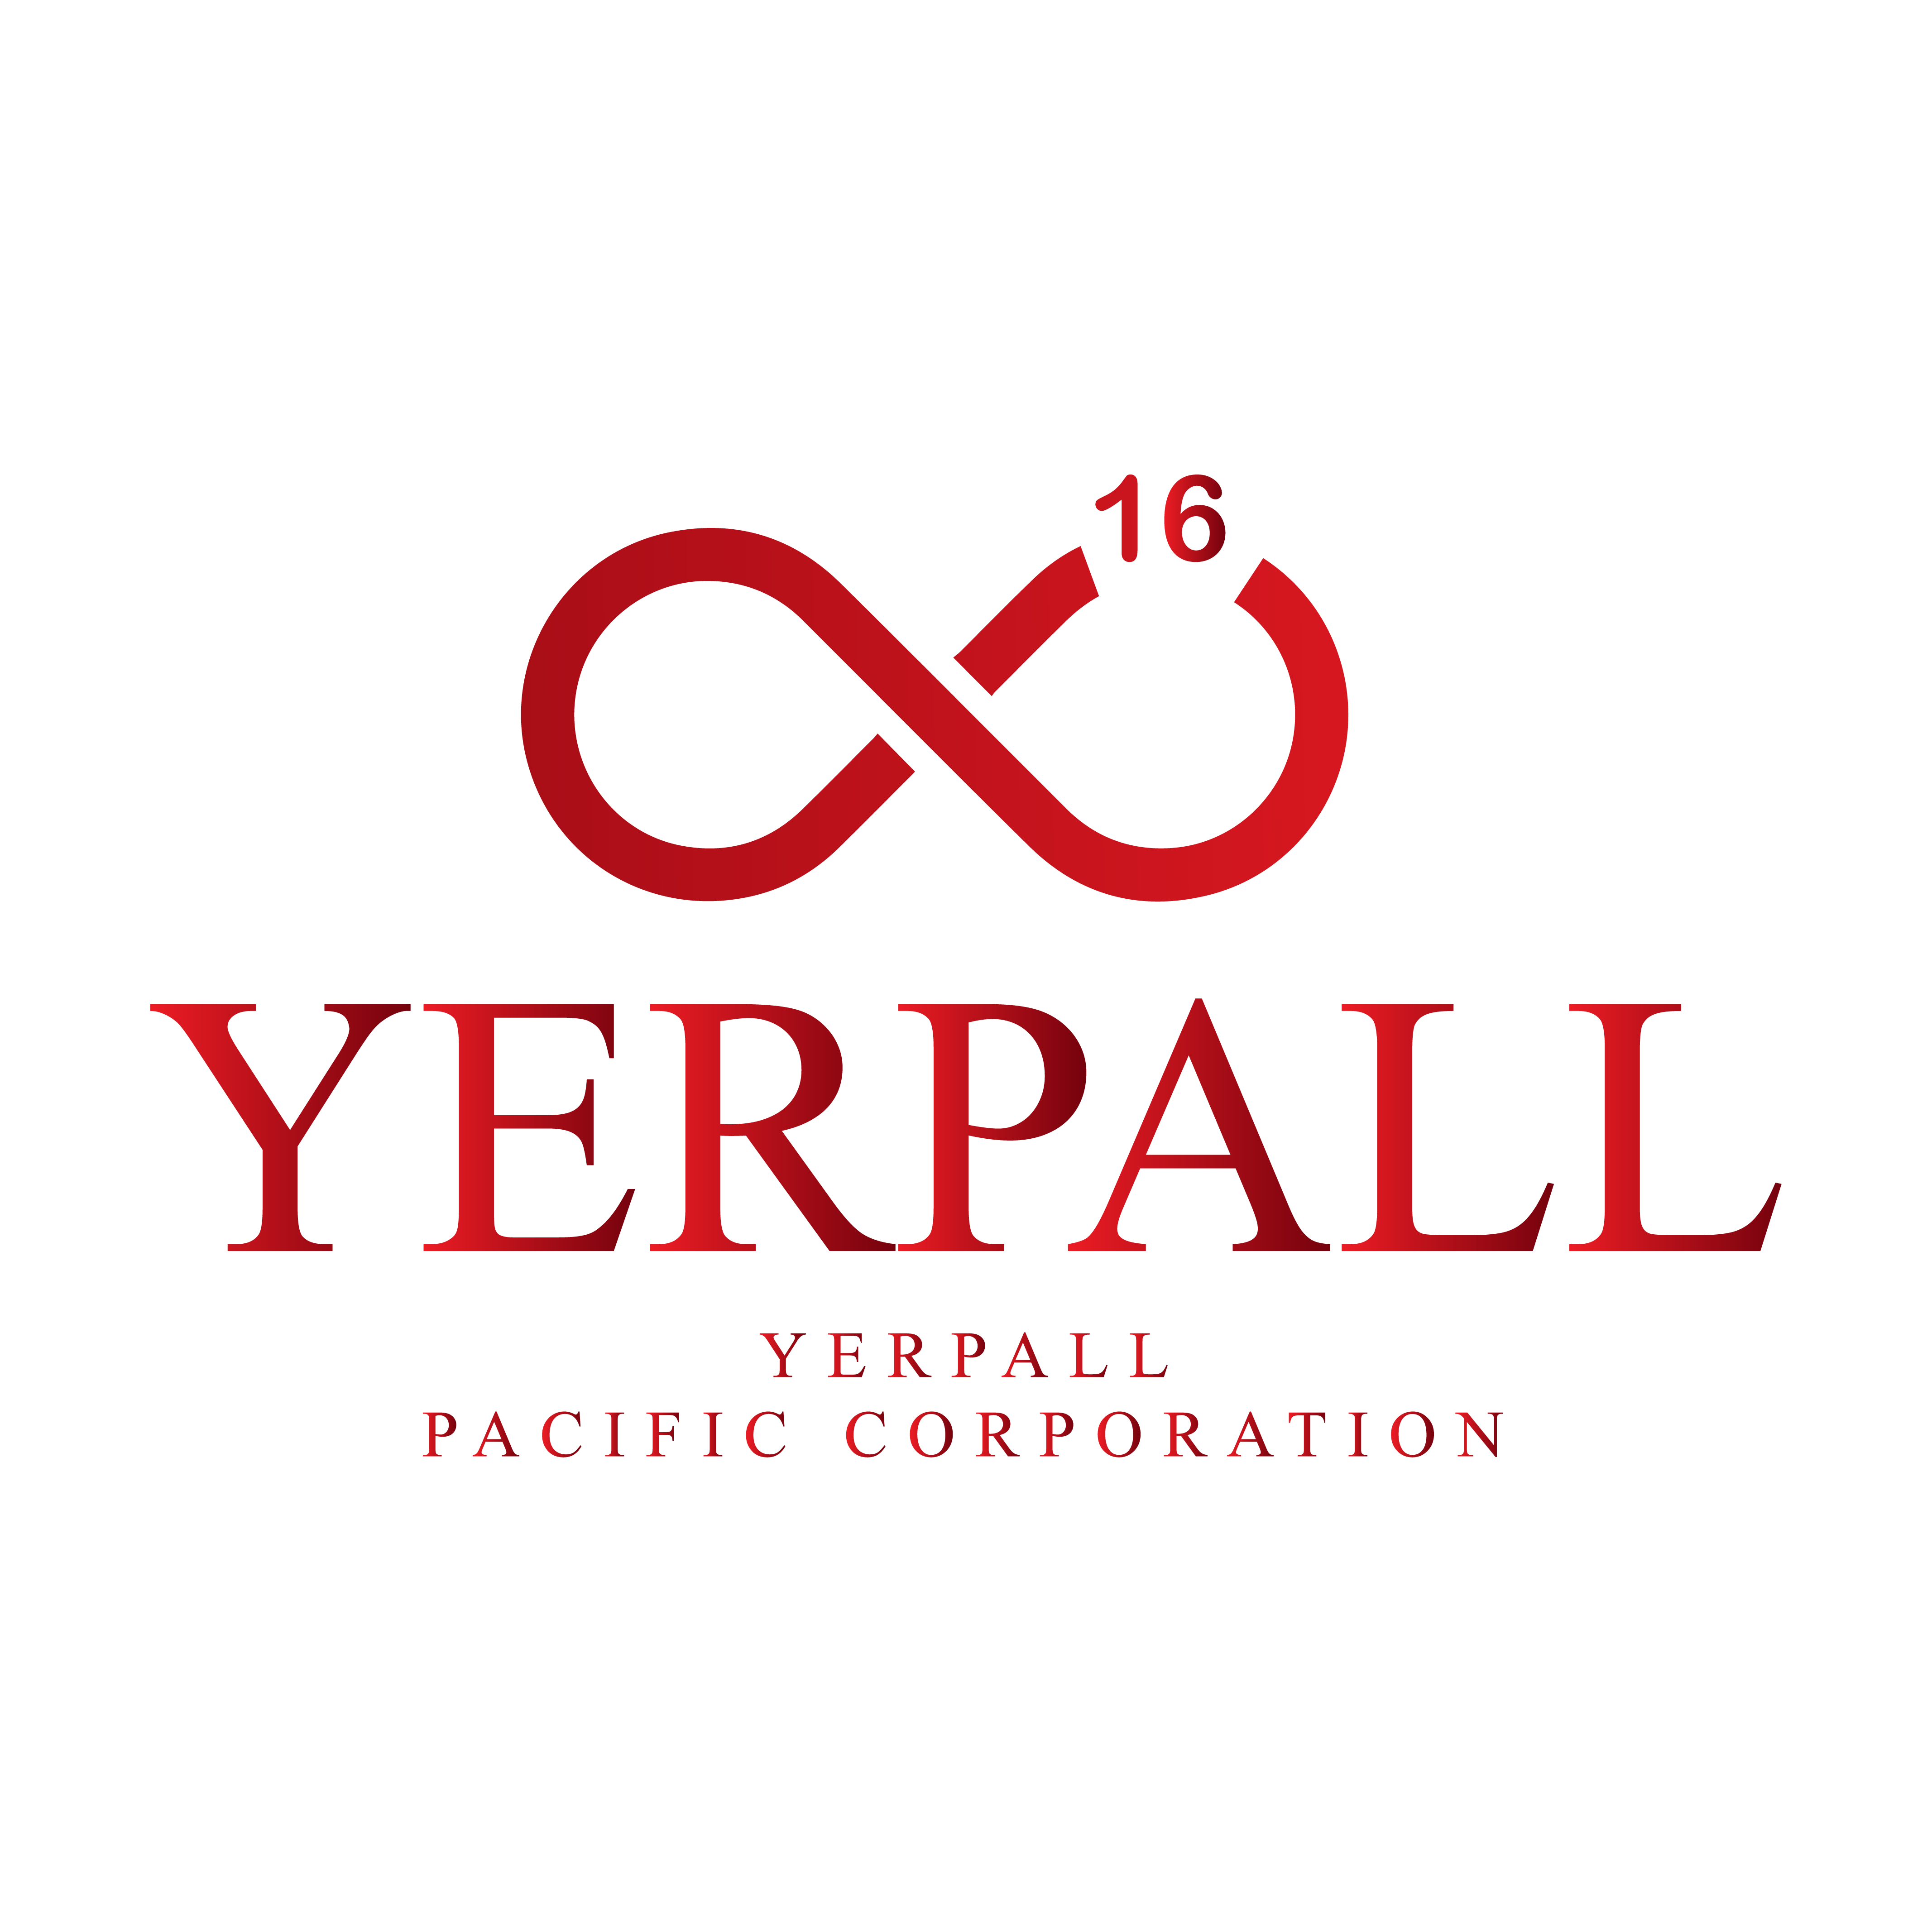 yerpall logo 